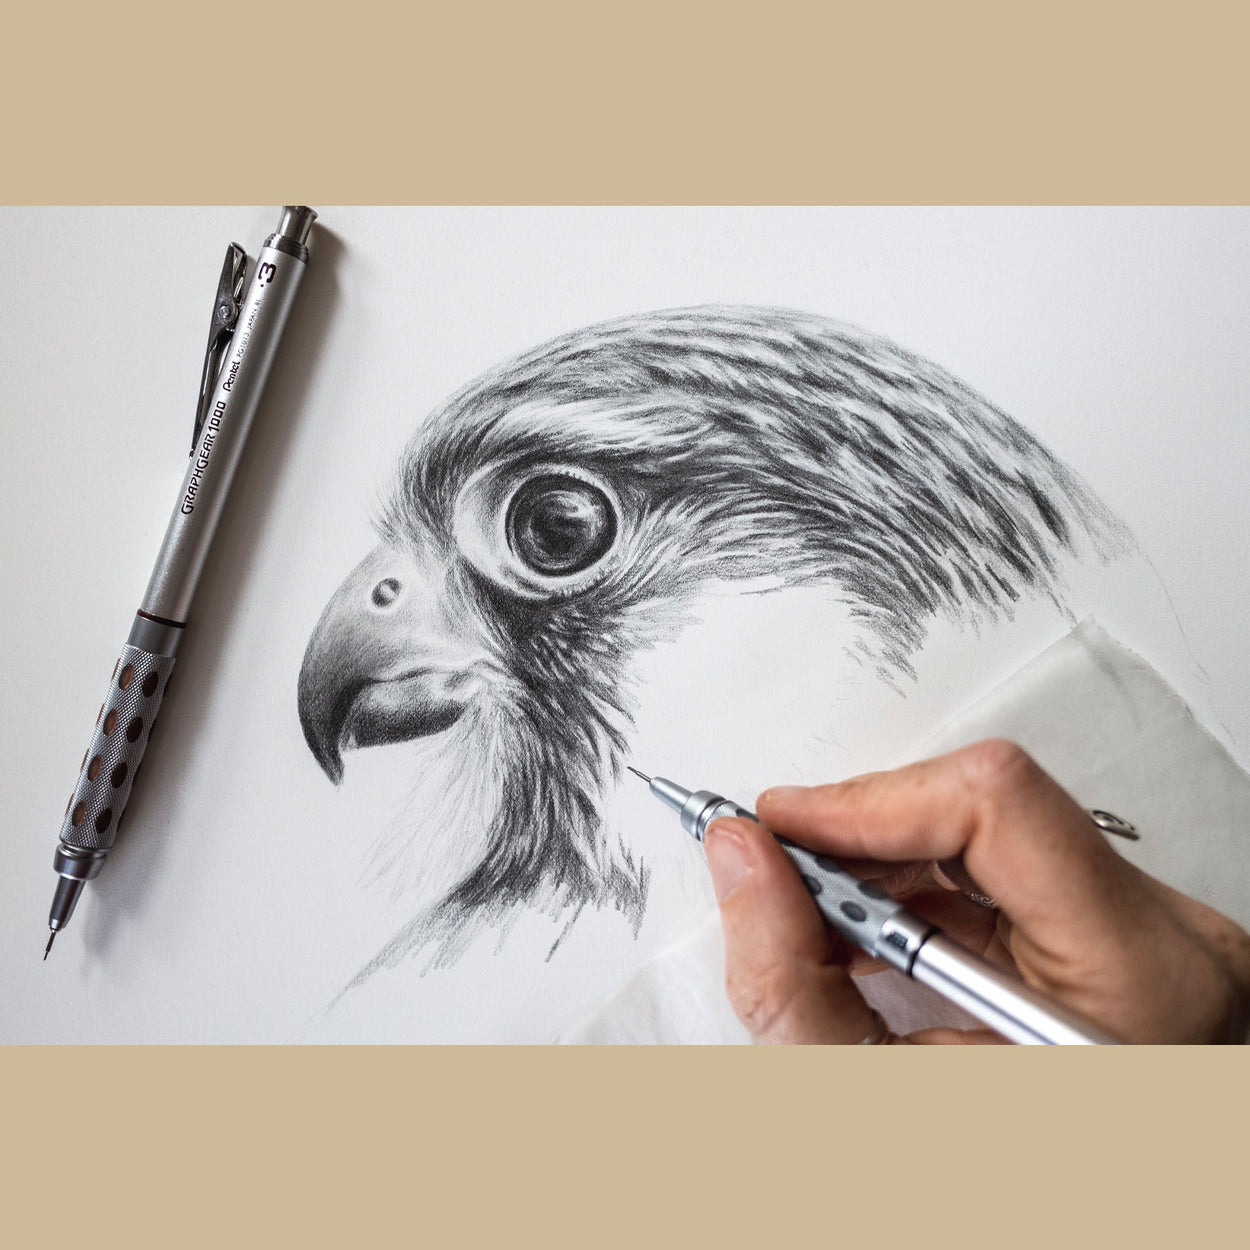 Kestrel Bird of Prey Drawing in Progress - The Thriving Wild - Jill Dimond